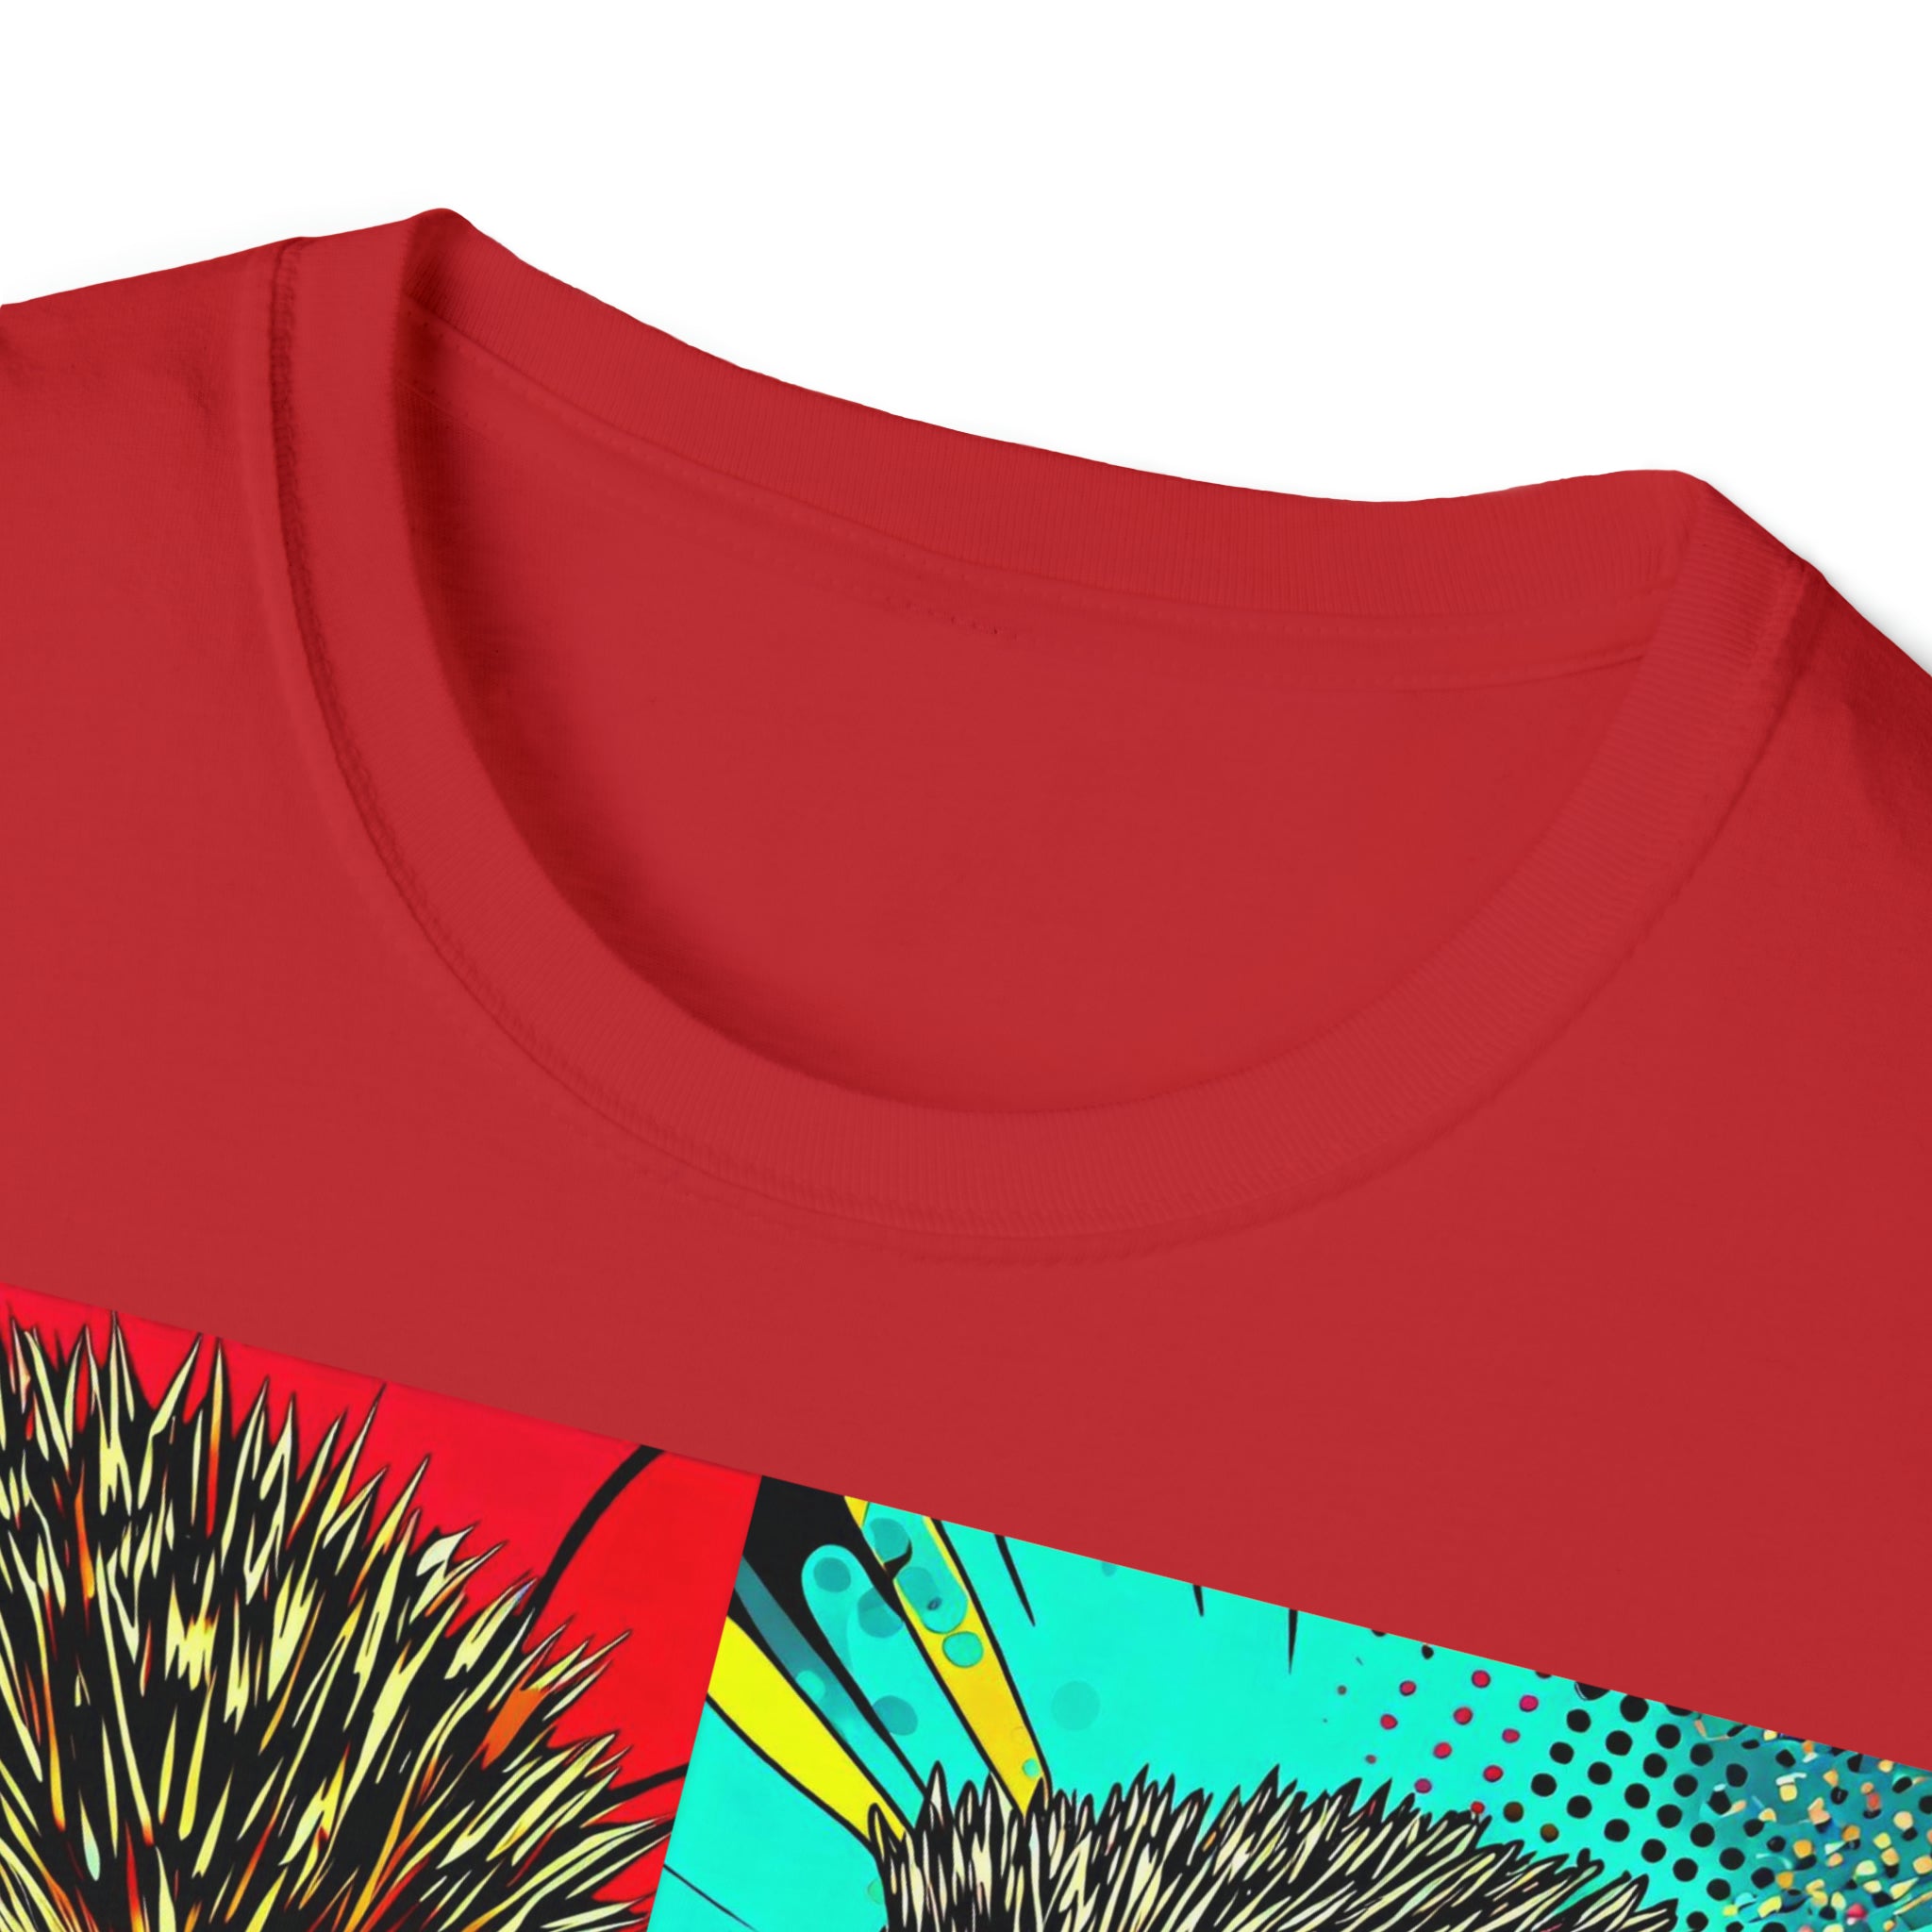 Unisex Softstyle T-Shirt Hedgehog in Pop Art